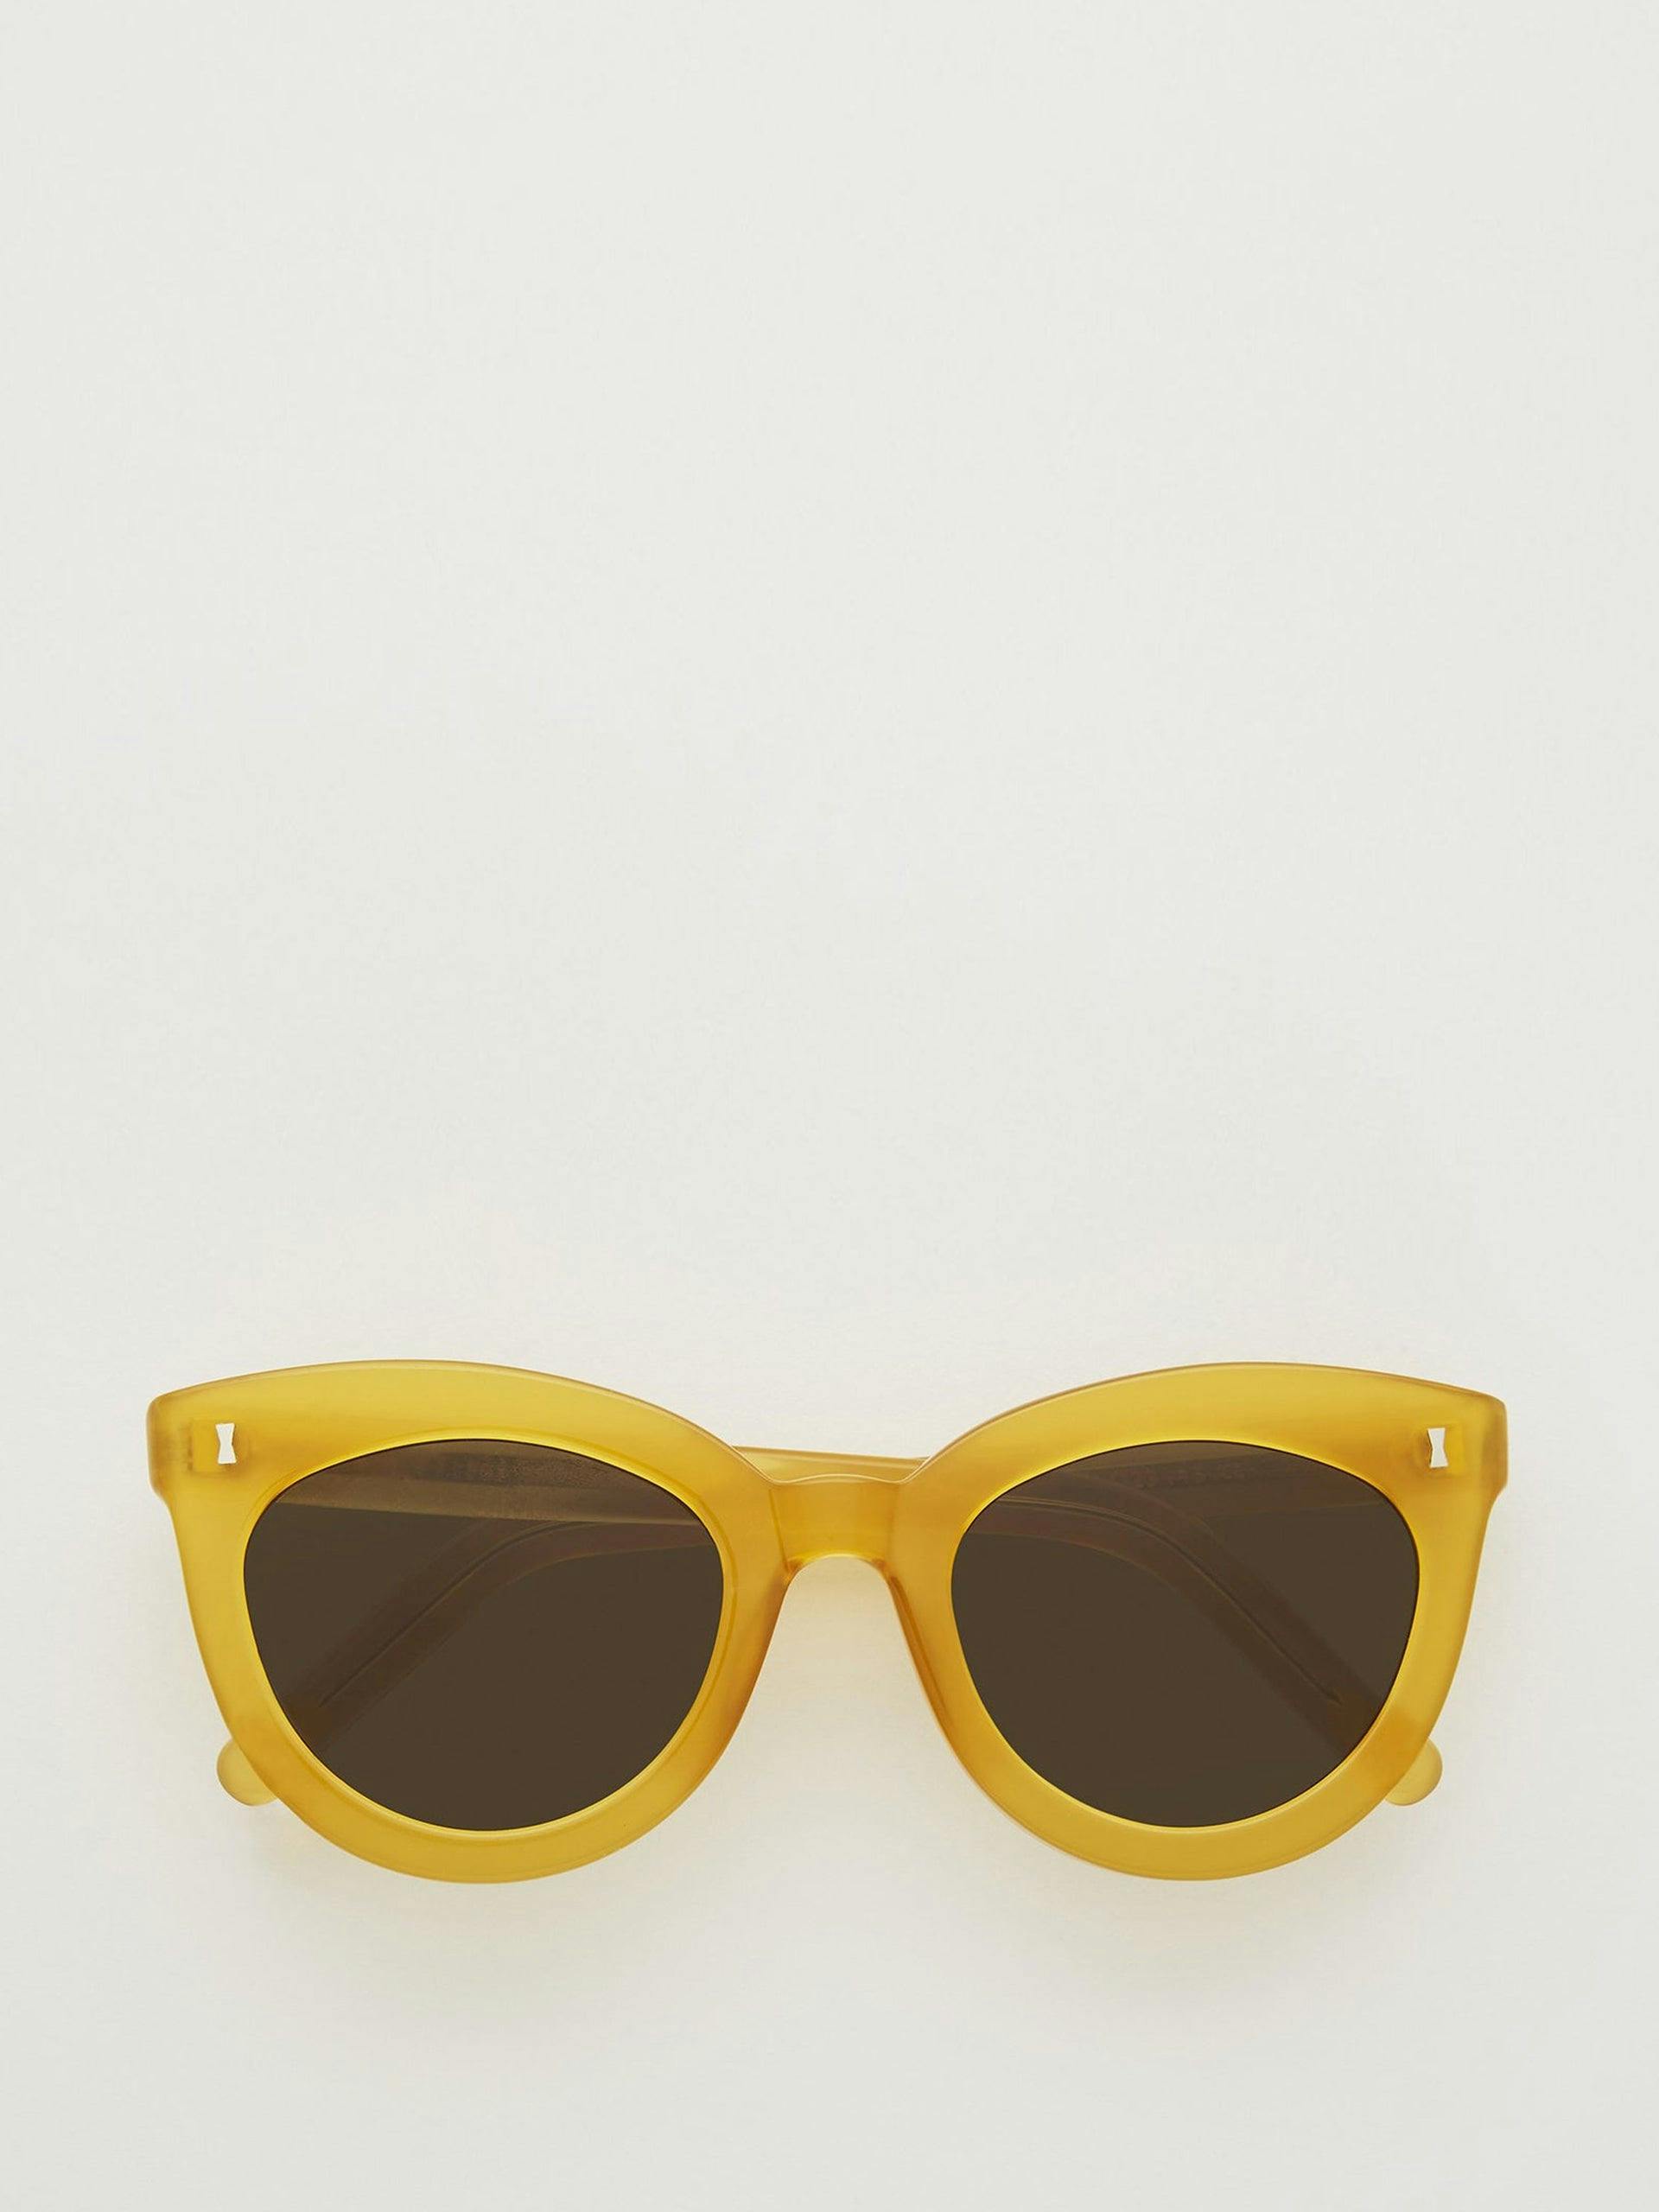 Yellow acetate sunglasses